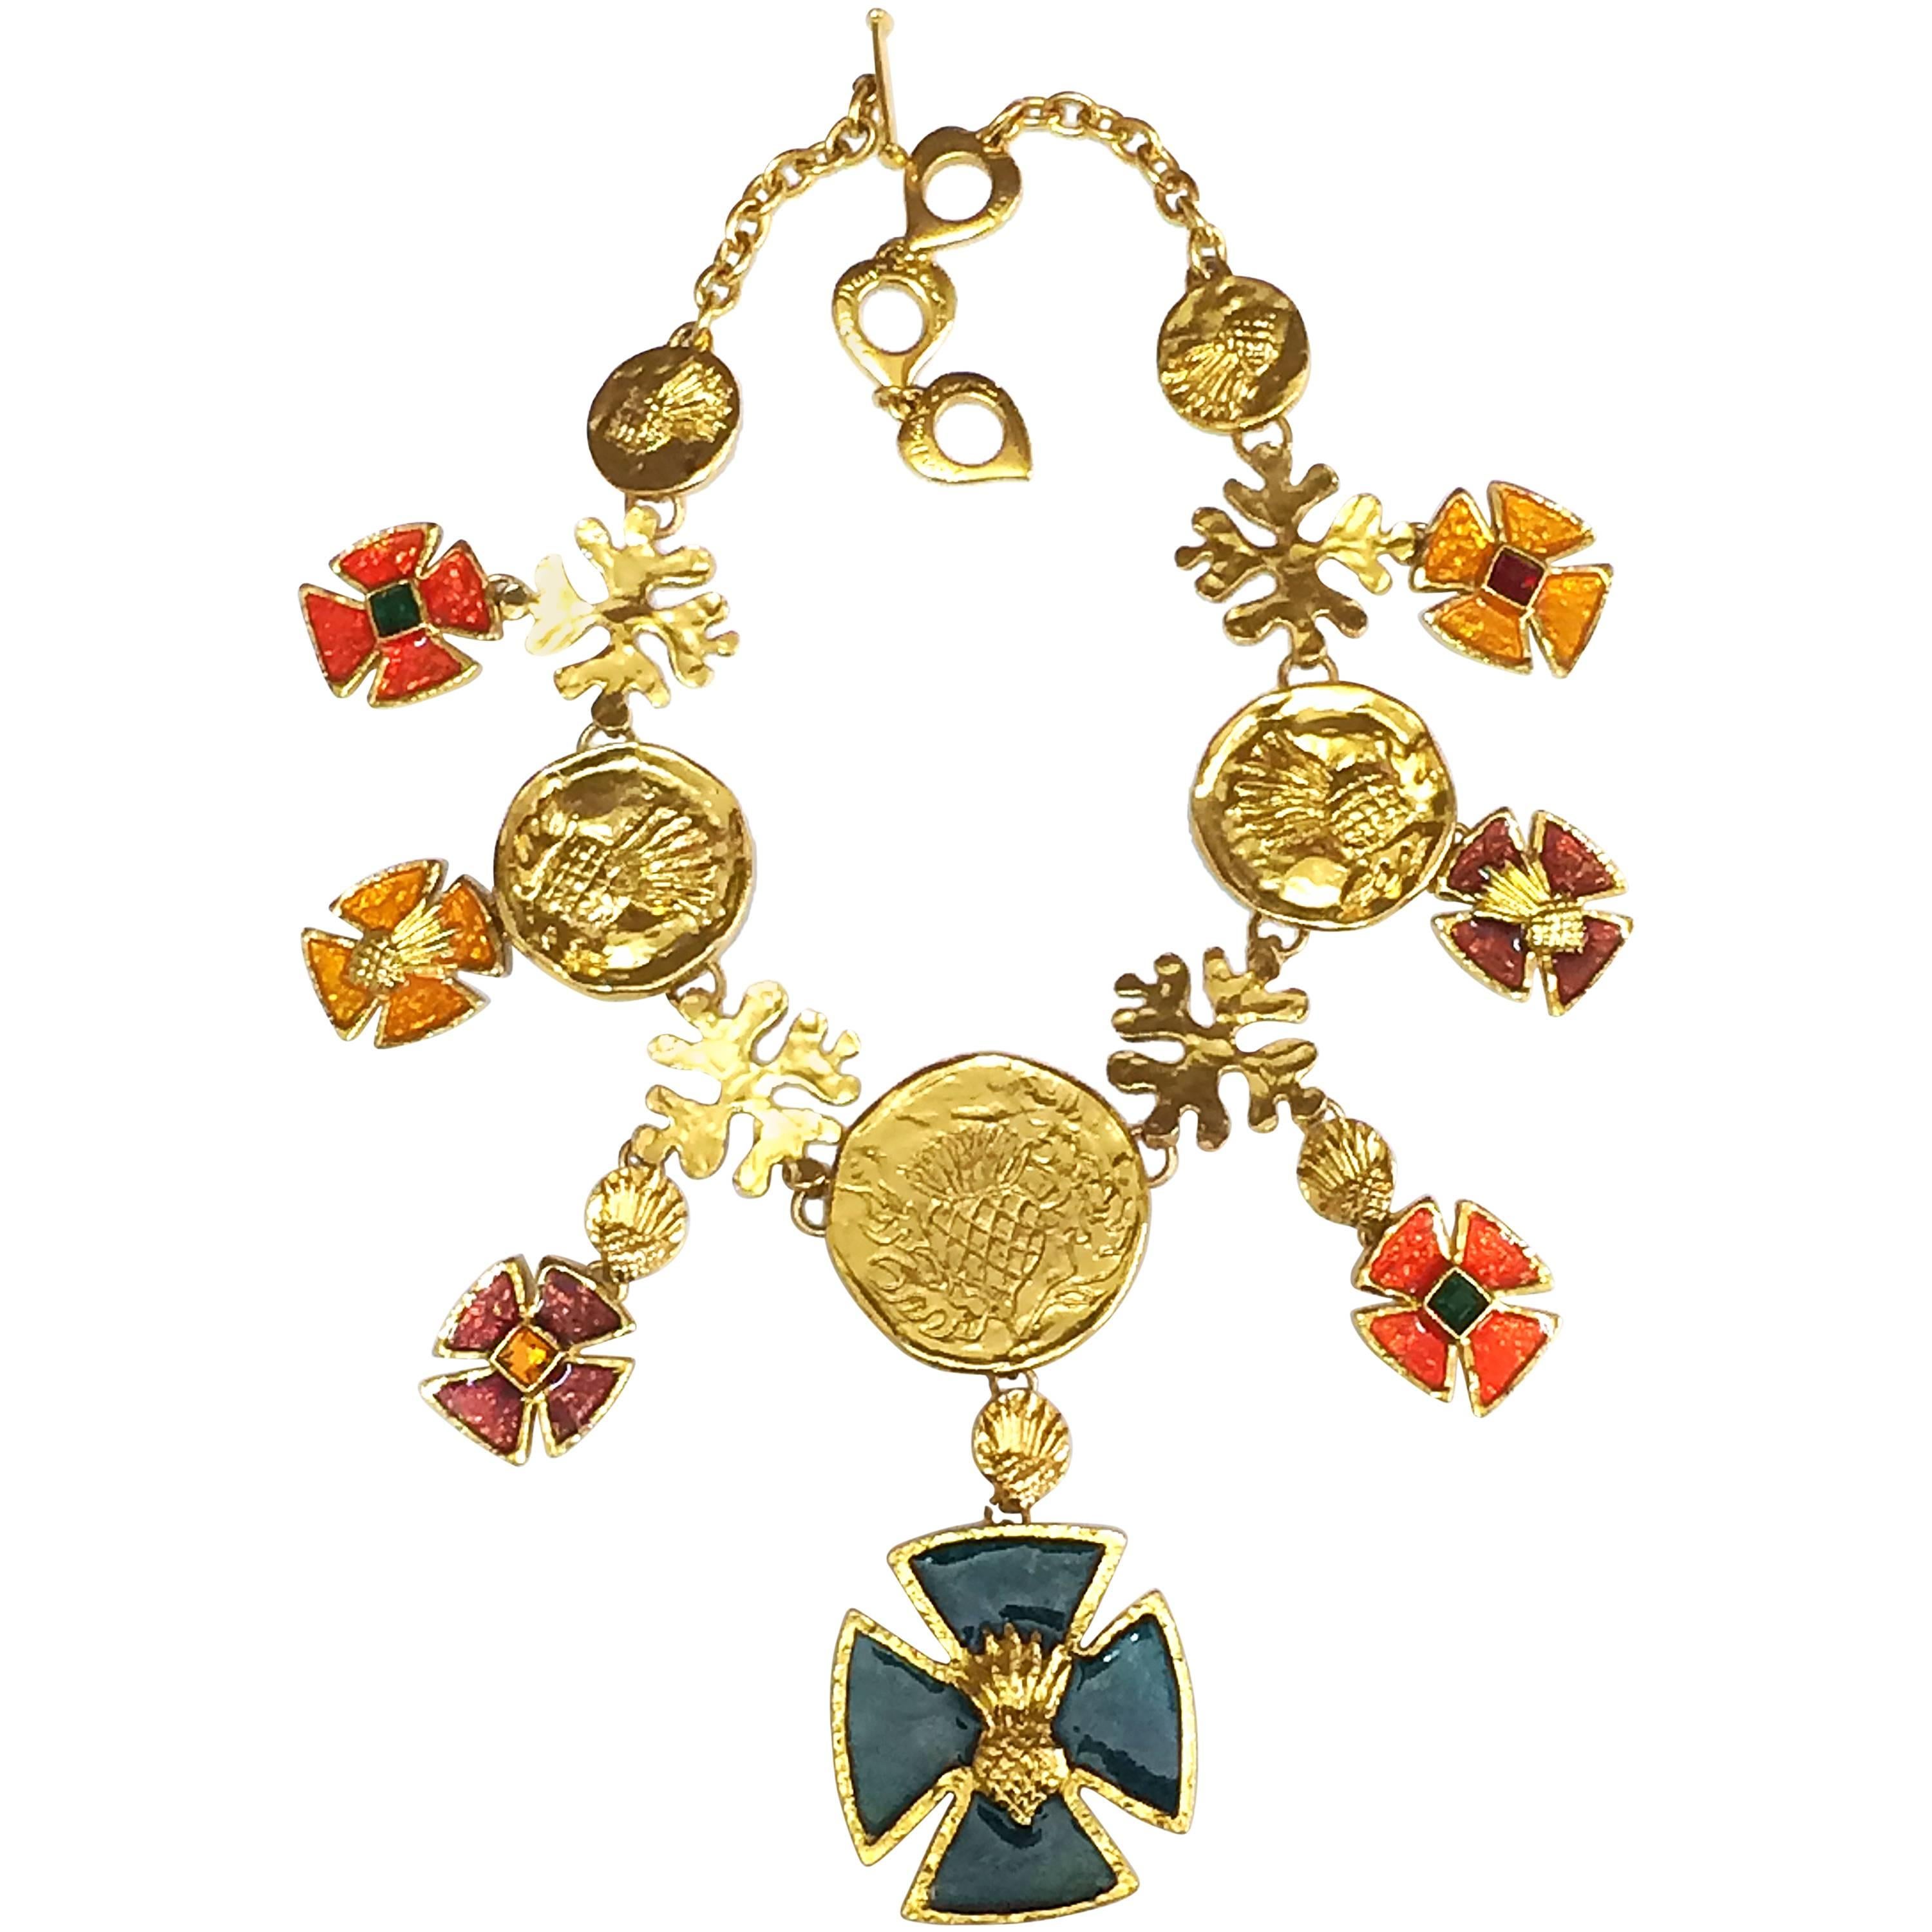 MINT. Vintage Yves Saint Laurent statement necklace with enamel cross charms. For Sale